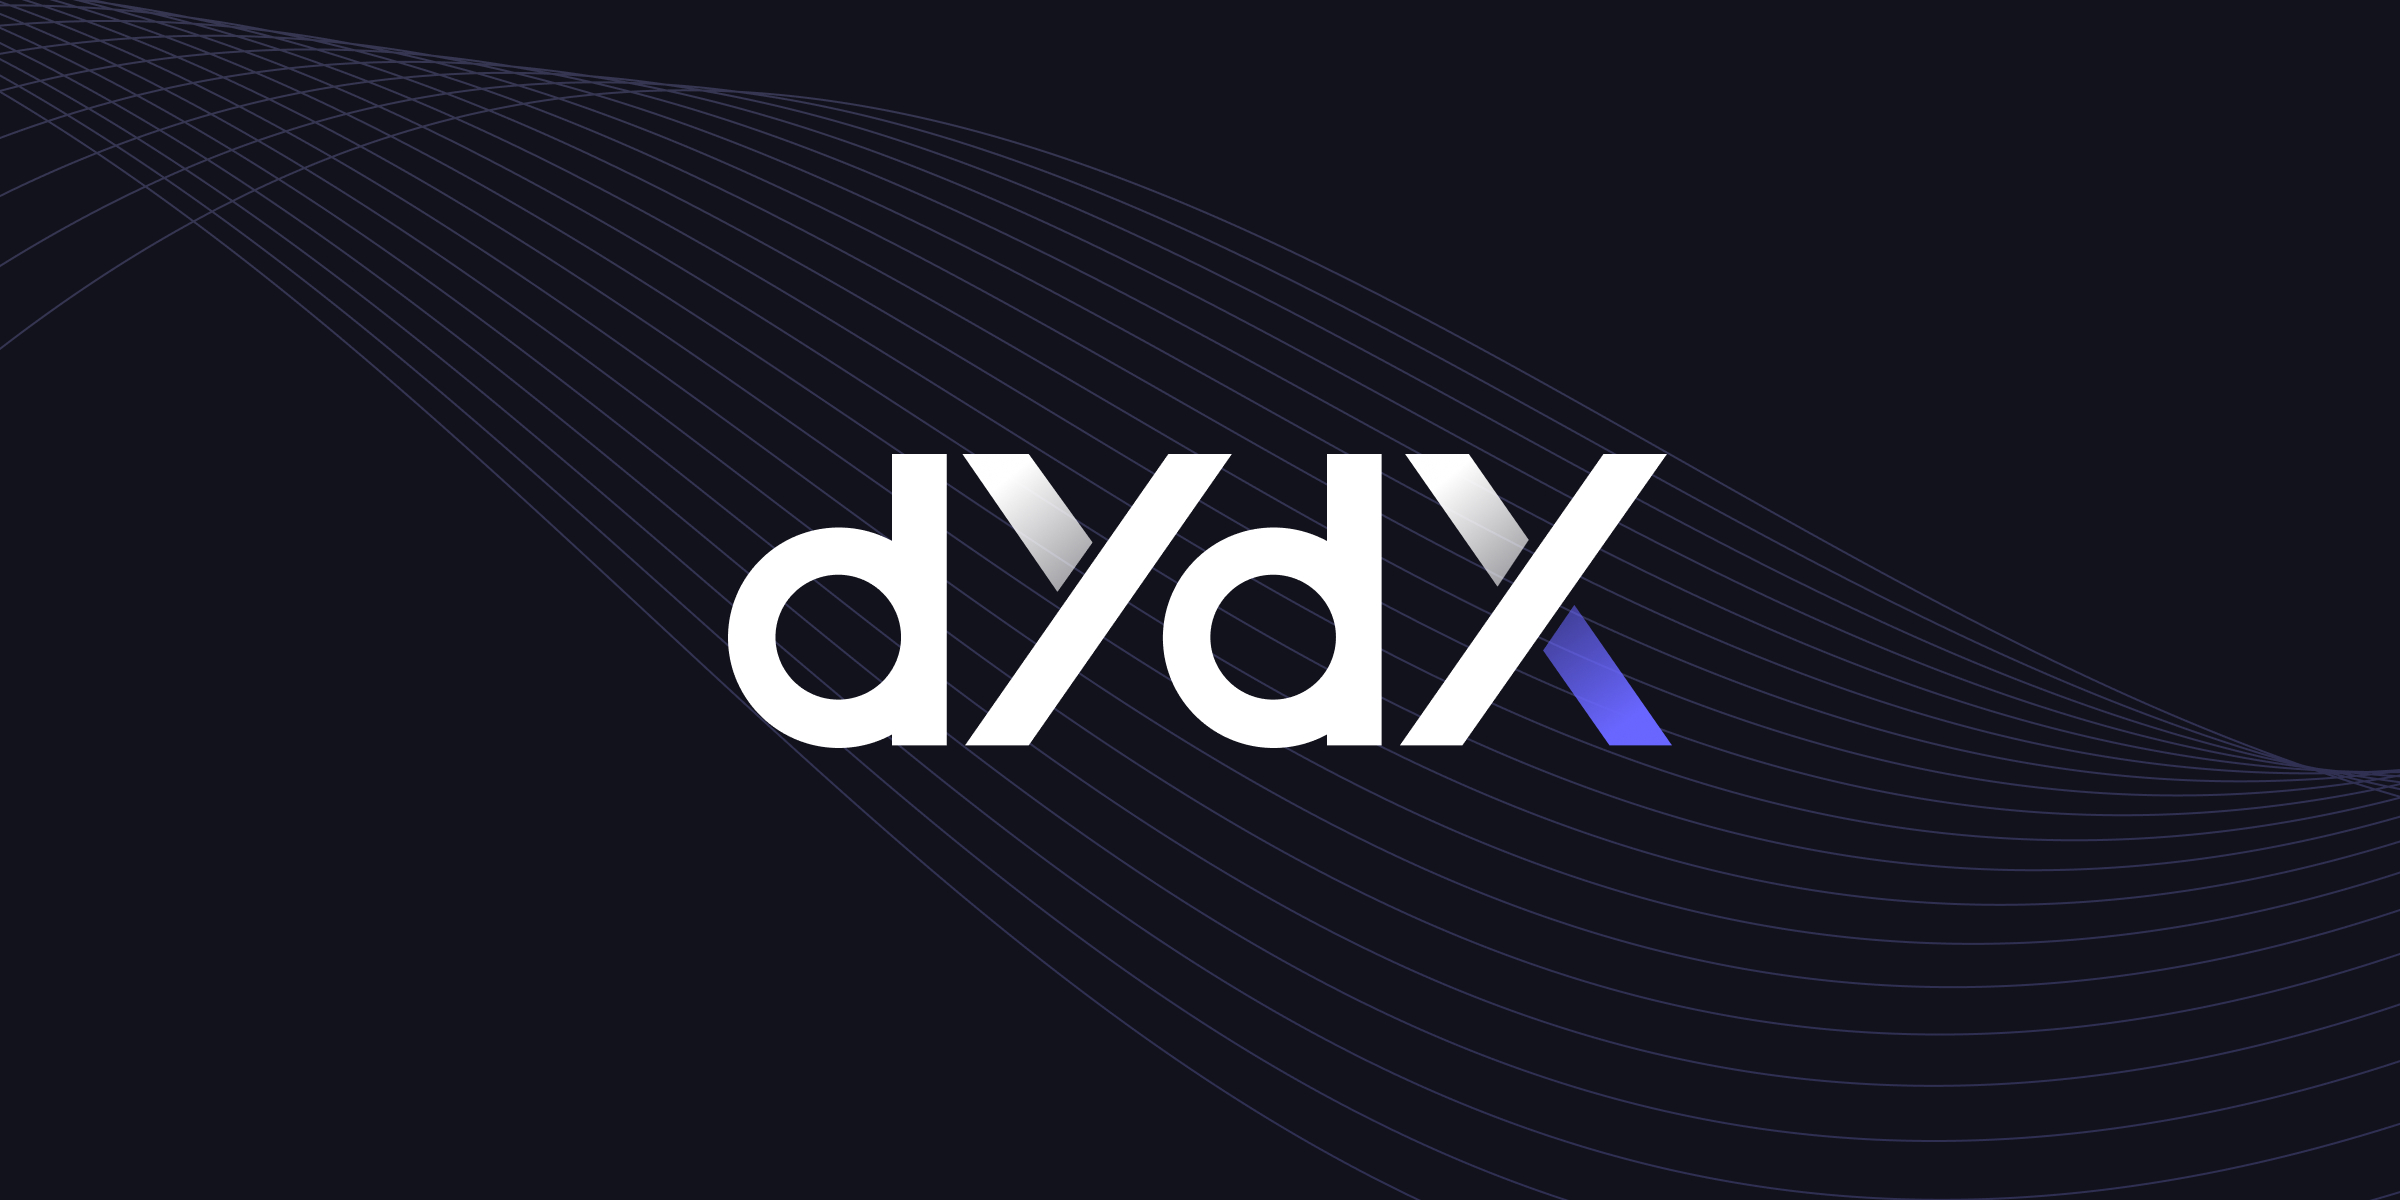 DYDX Token Receives Full Community Support for dYdX Chain Integration